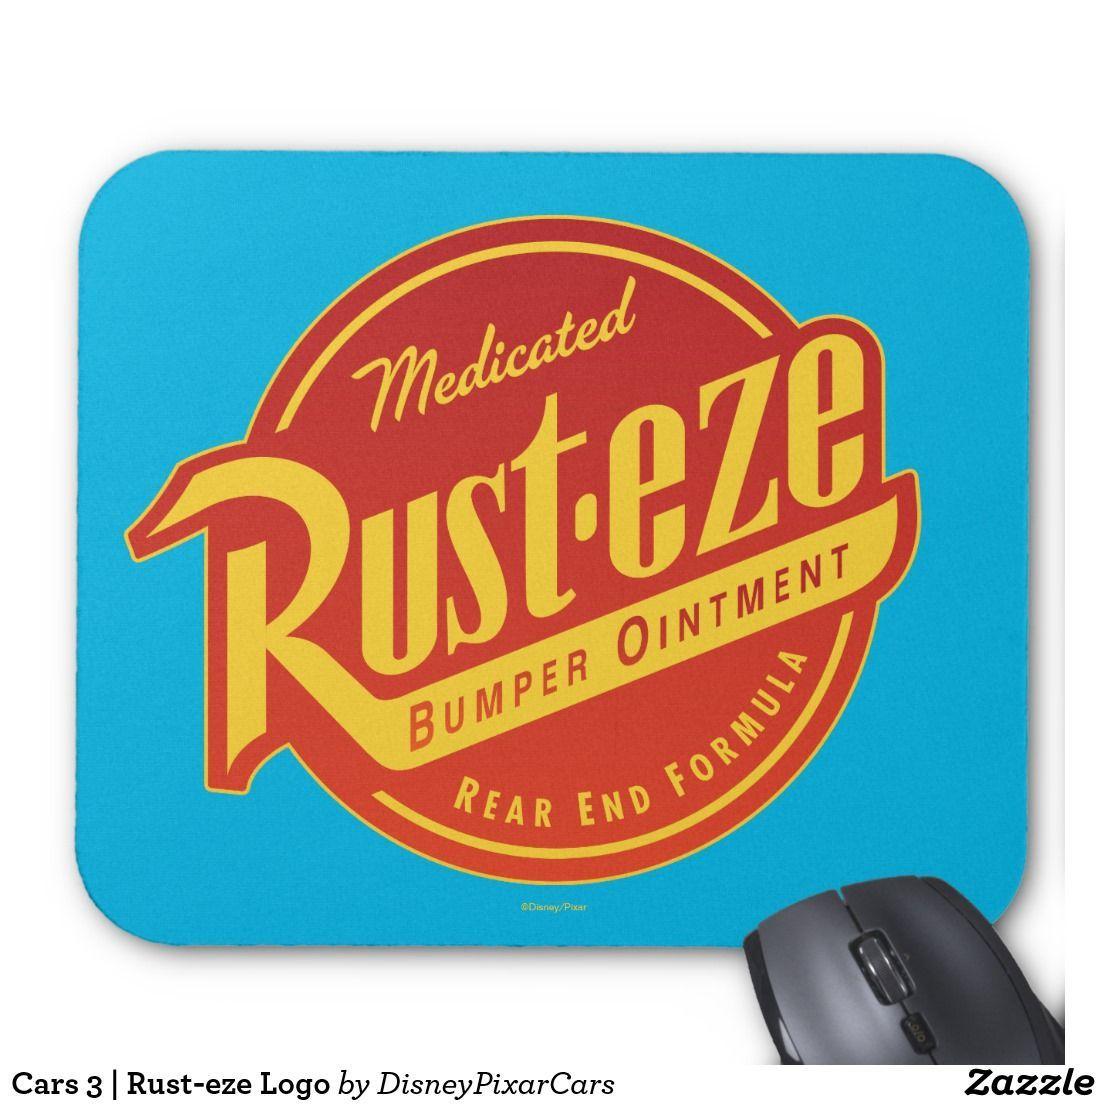 Rust-eze Logo - Cars 3. Rust Eze Logo Mouse Pad. Zazzle.com. Disney Cars 3